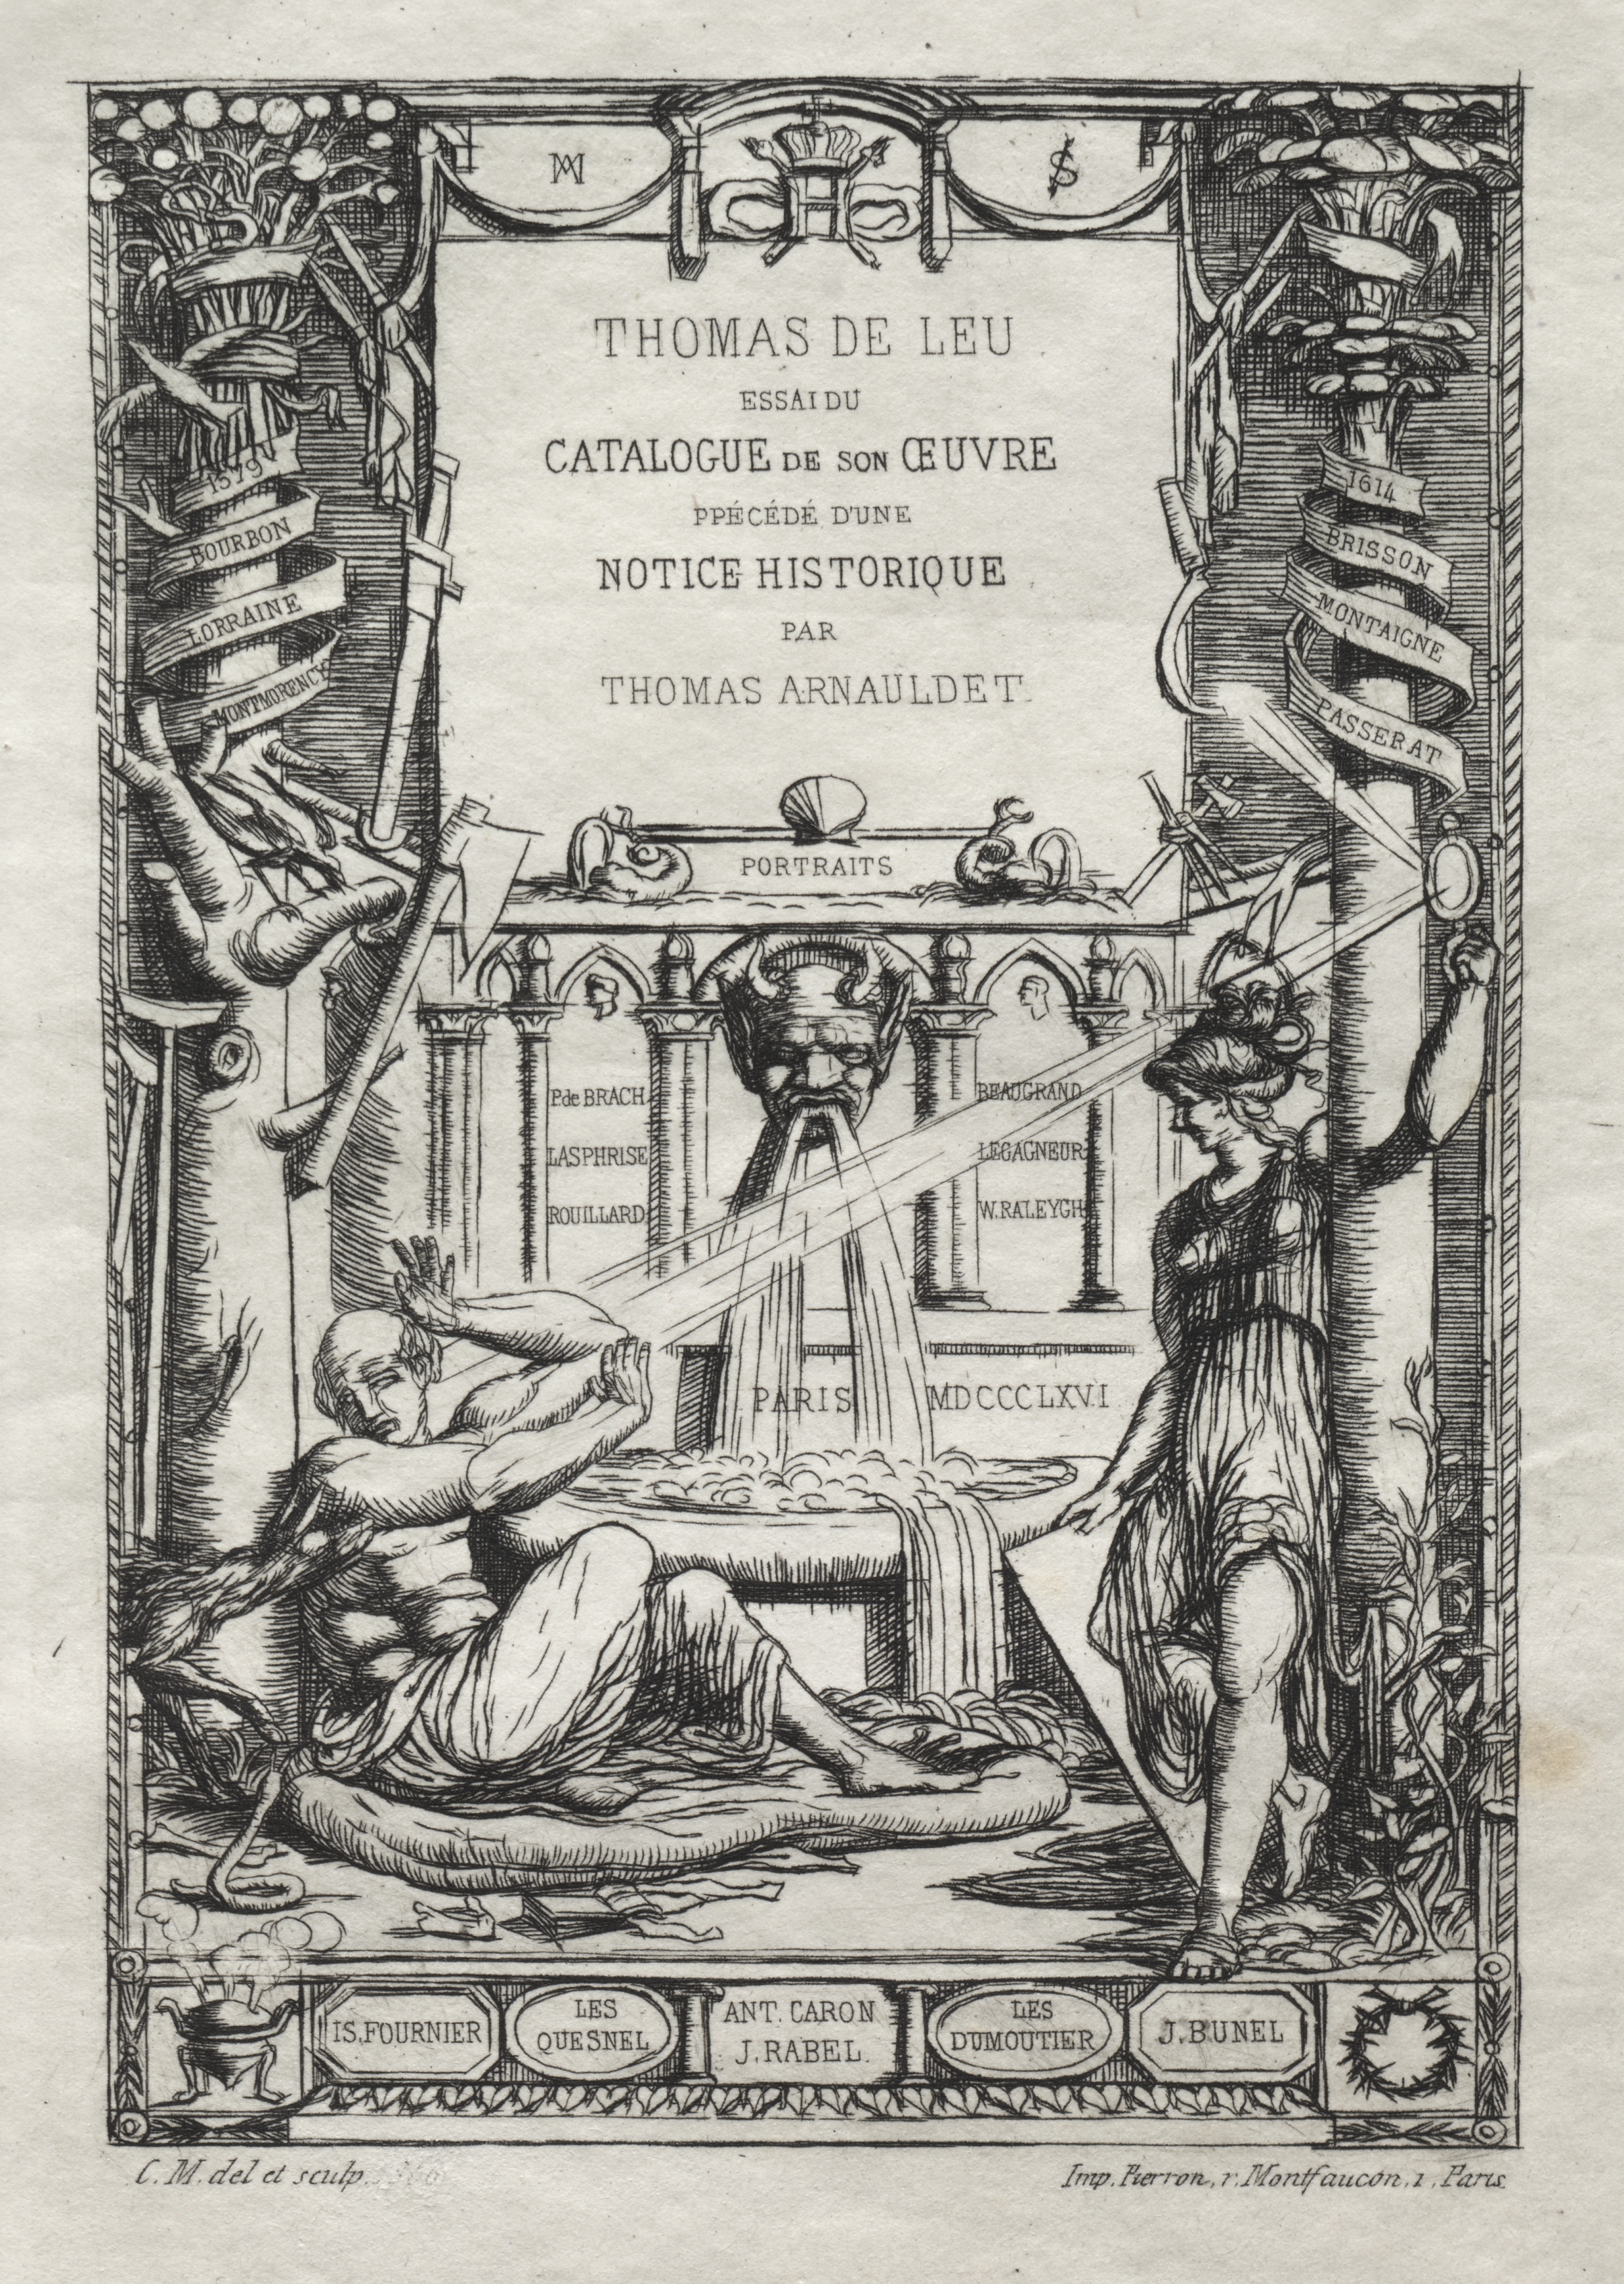 Frontispiece for a Catalogue of the Engravings of Thomas de Leu